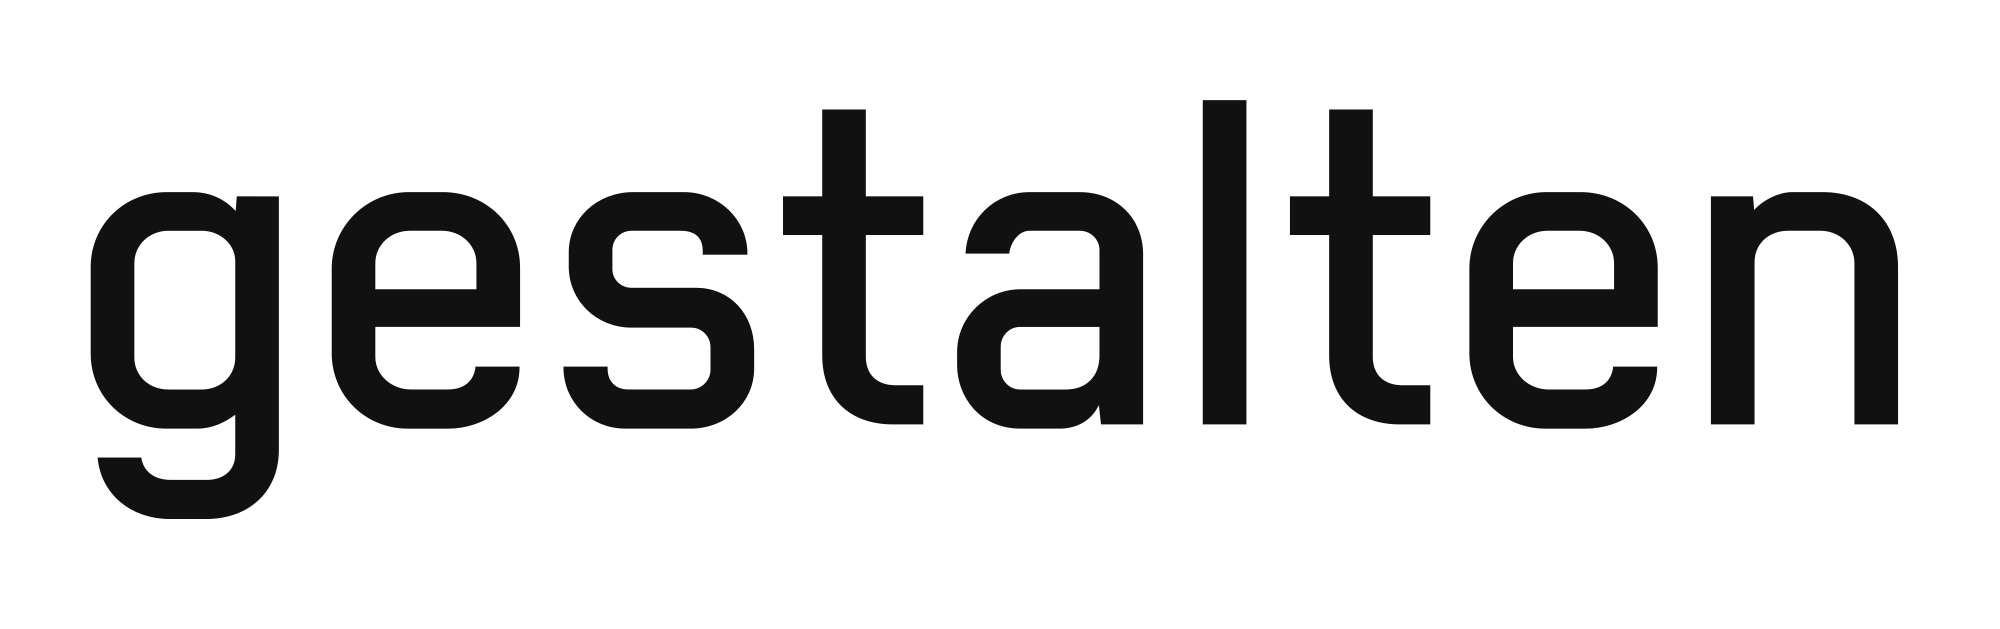 GESTALTEN_logo.svg.png